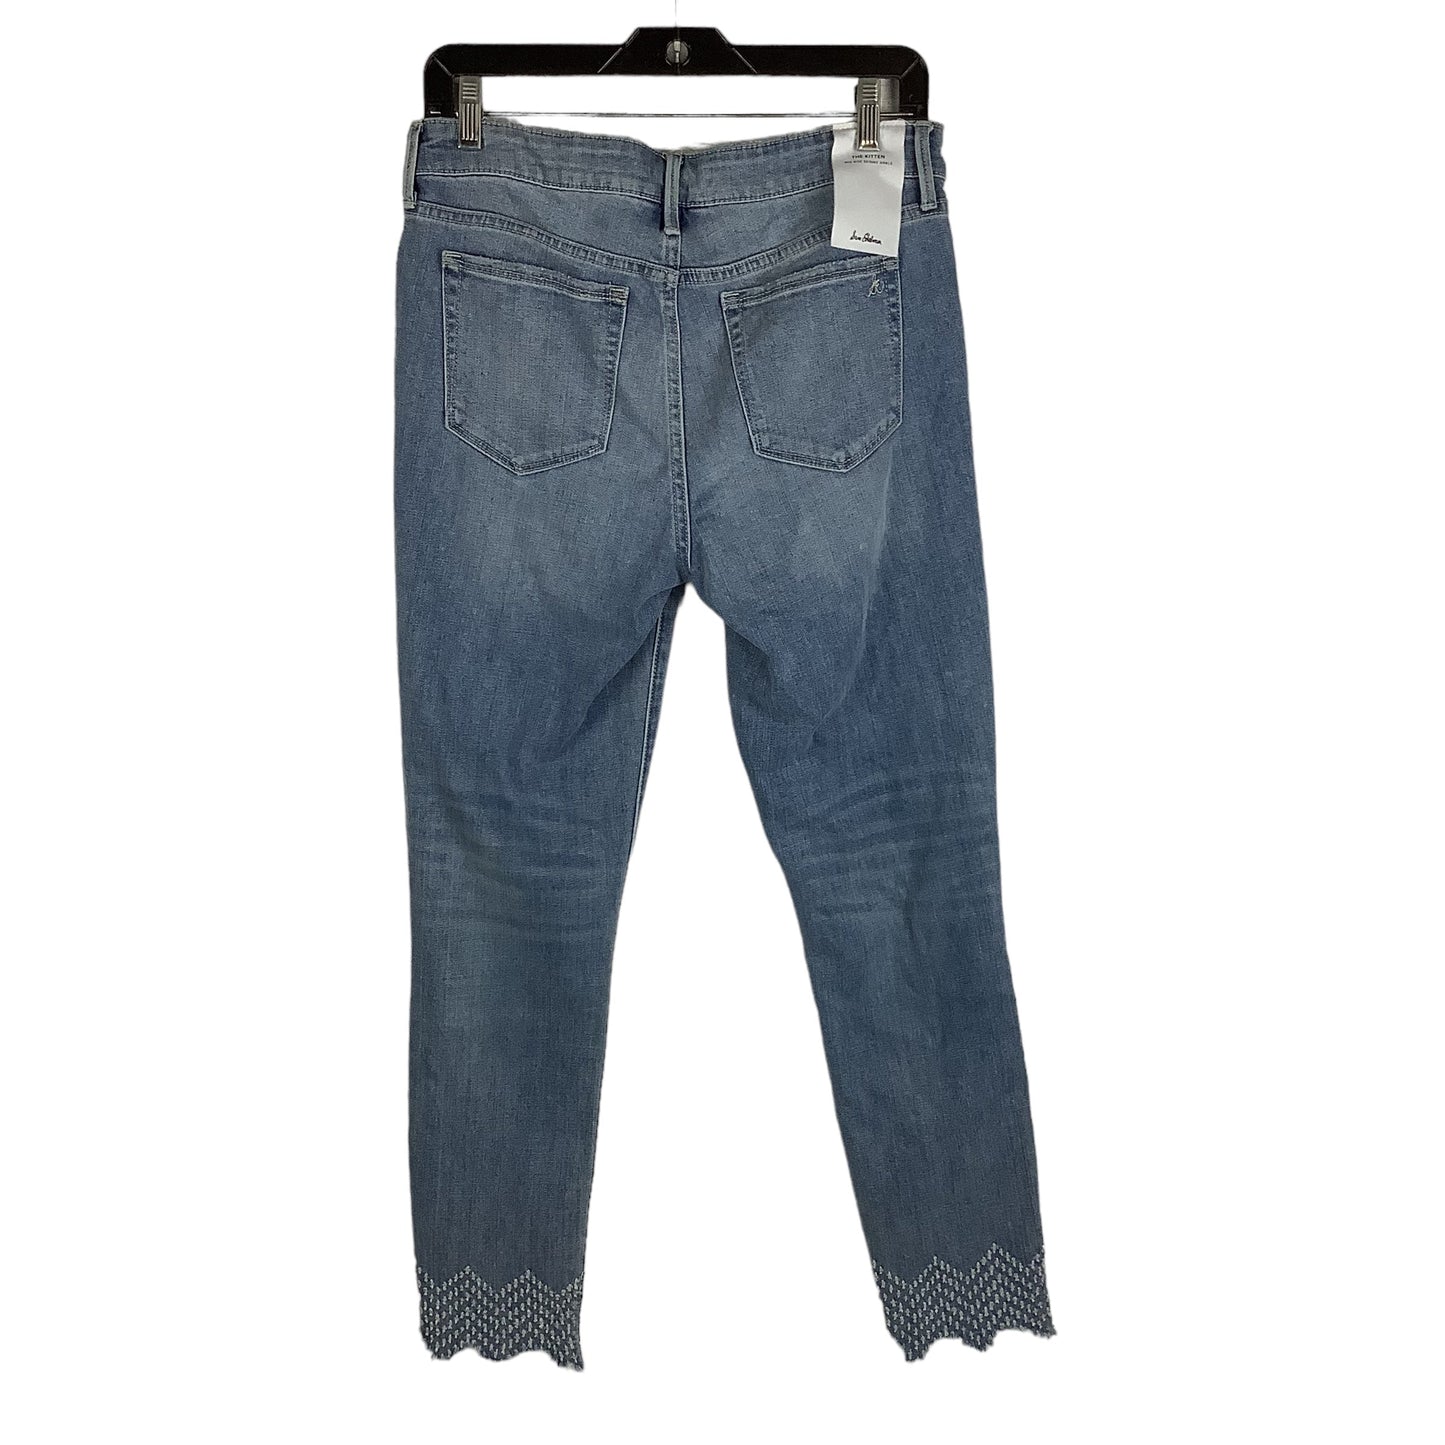 Blue Denim Jeans Skinny Sam Edelman, Size 8